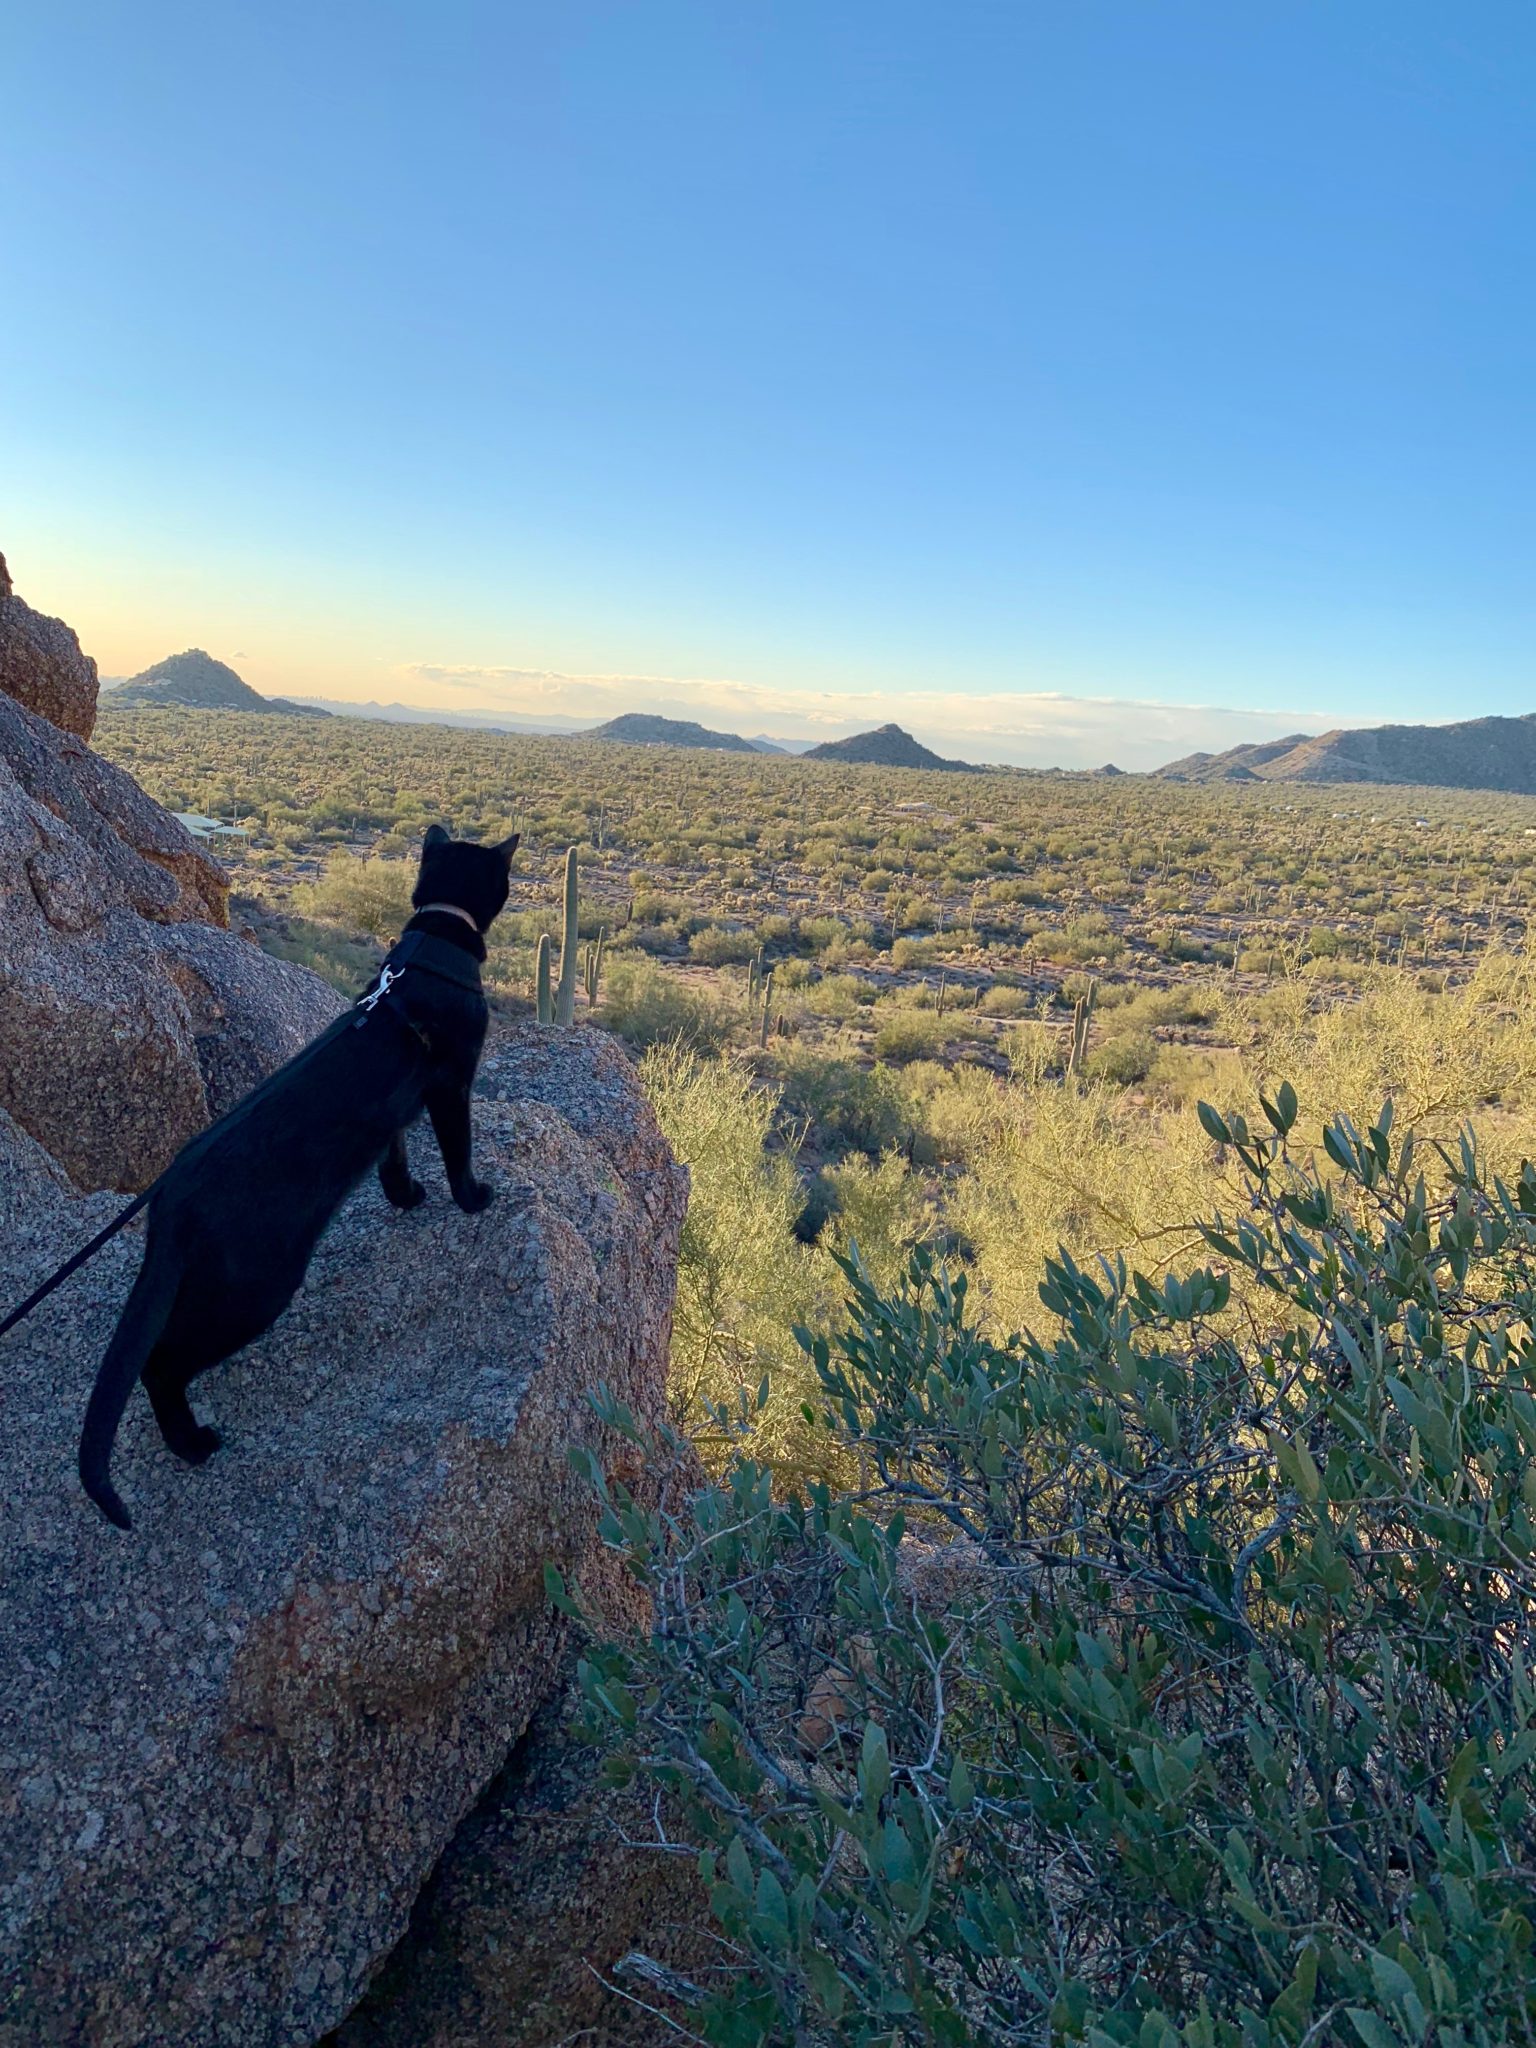 Cash adventure cat overlooks Sonoran Desert